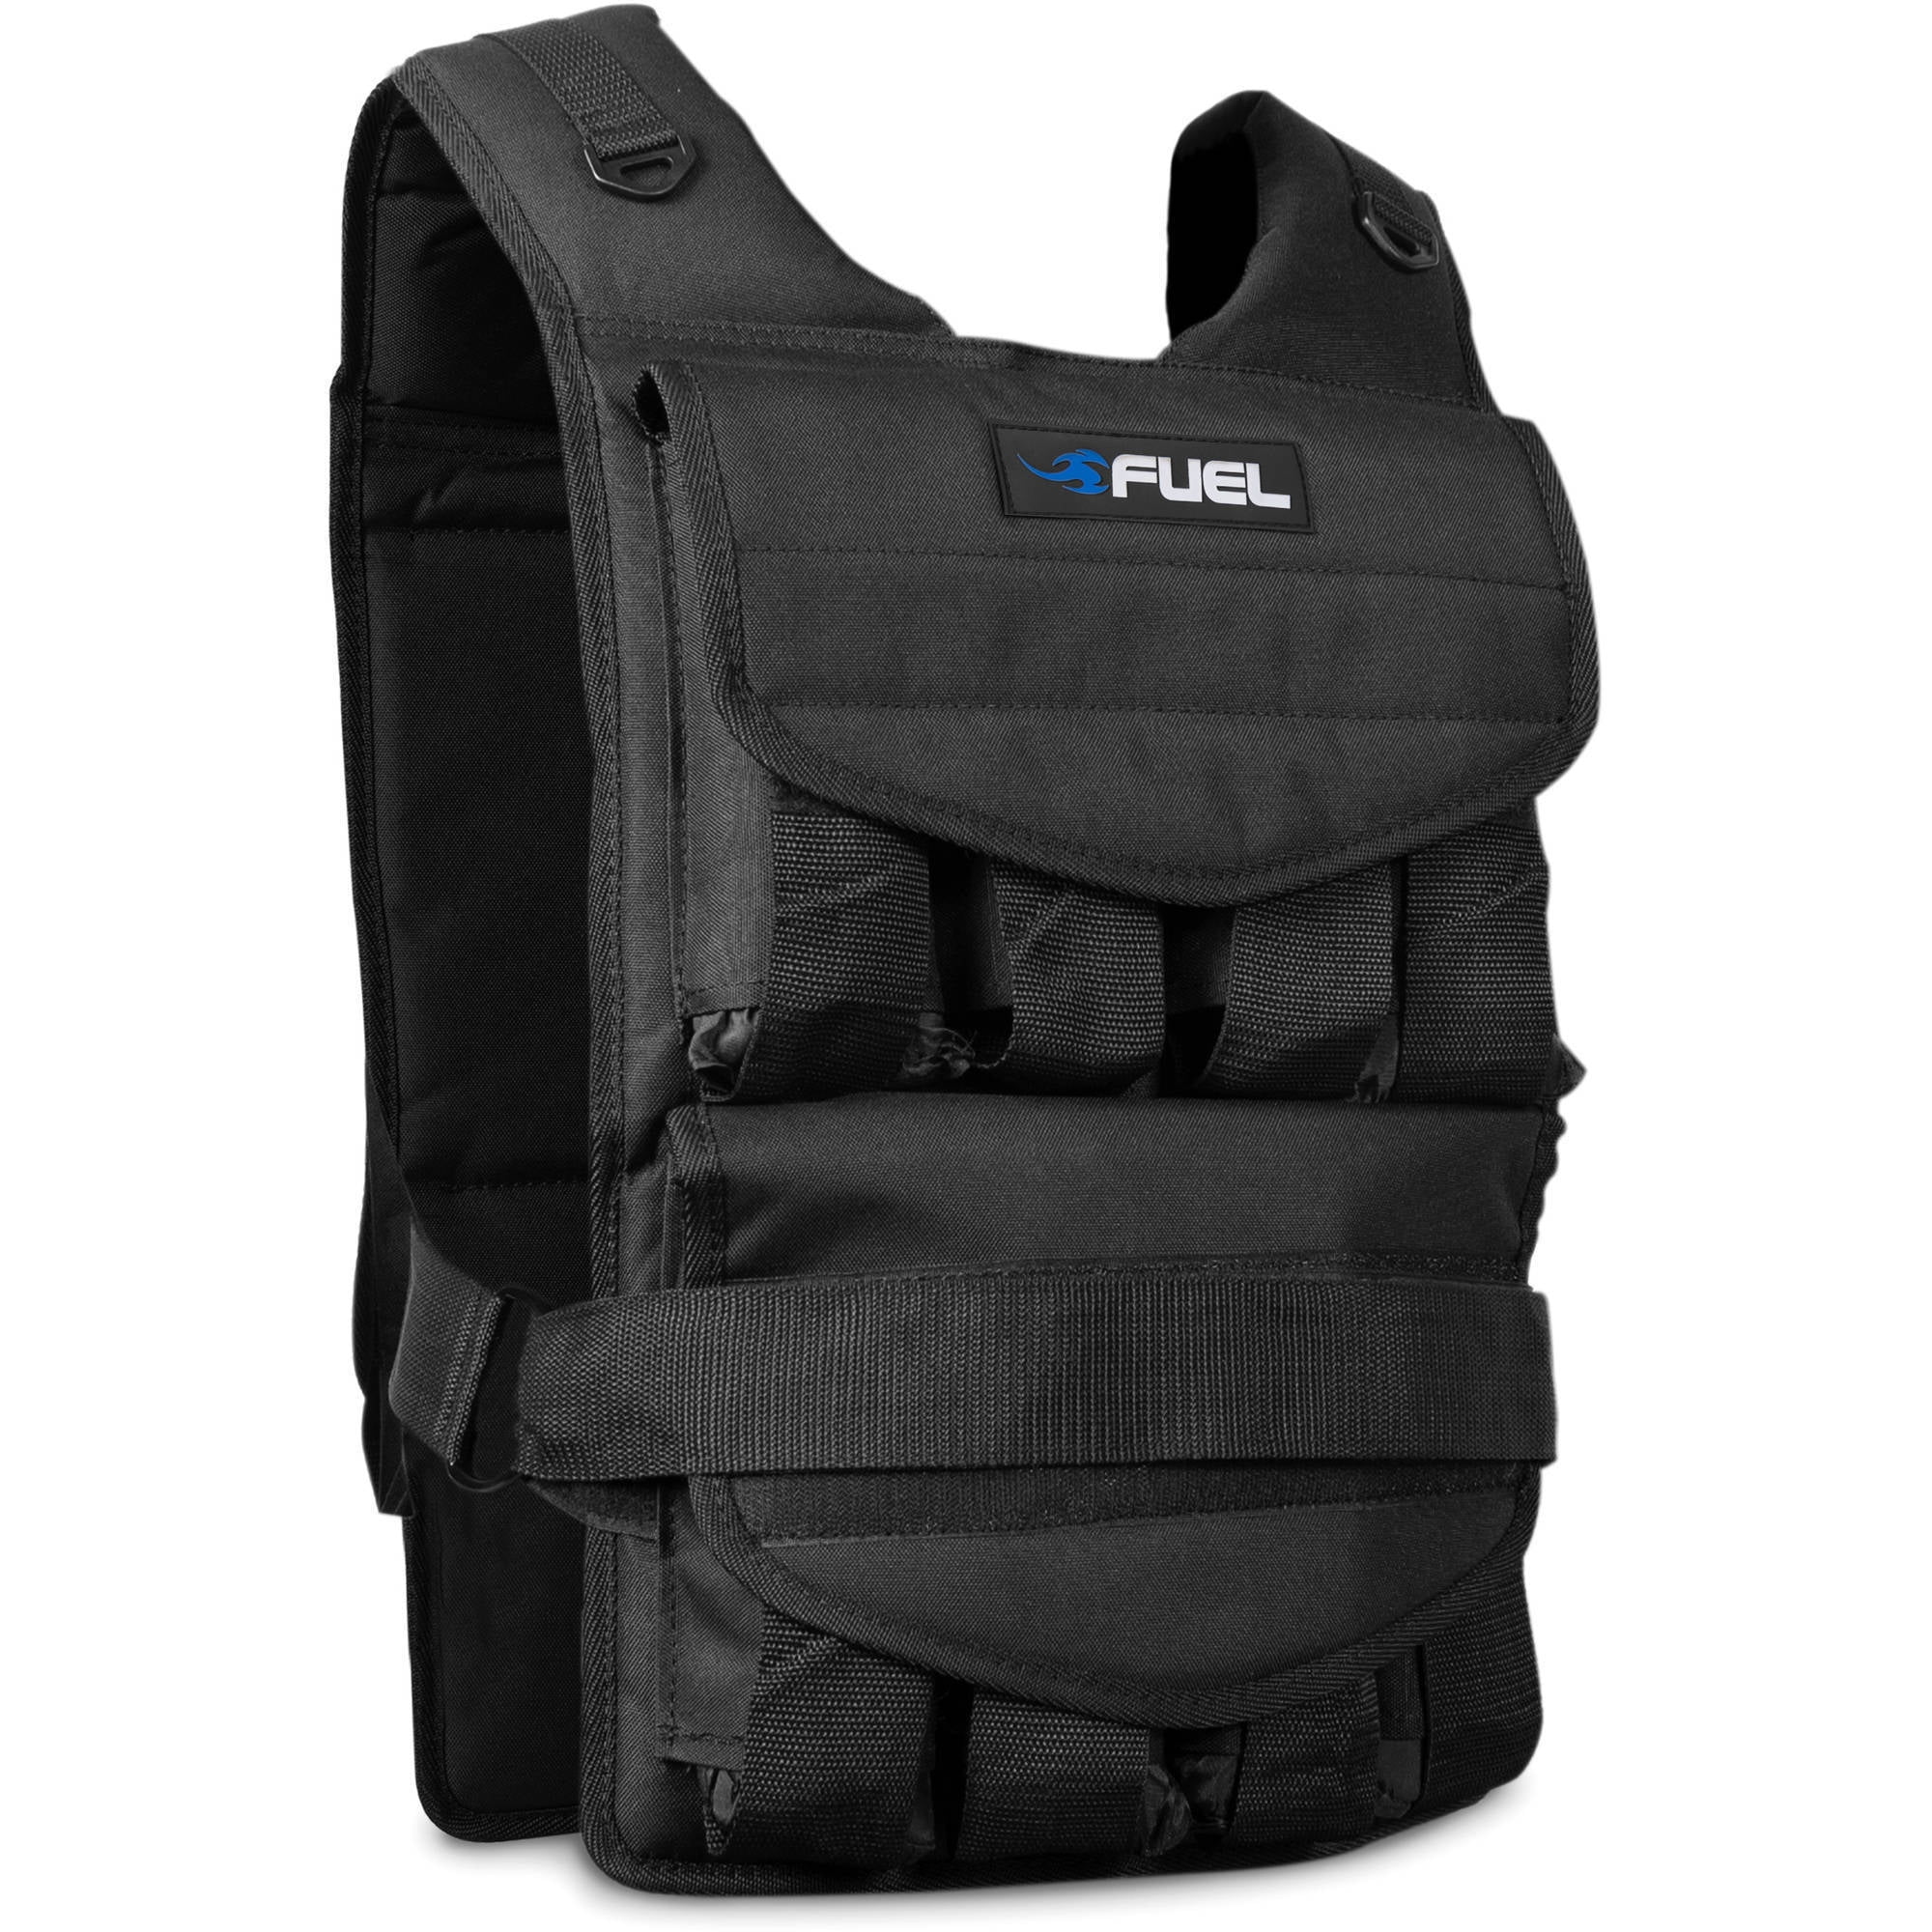 Fuel Pureformance Adjustable Weighted Vest, 80 lbs 